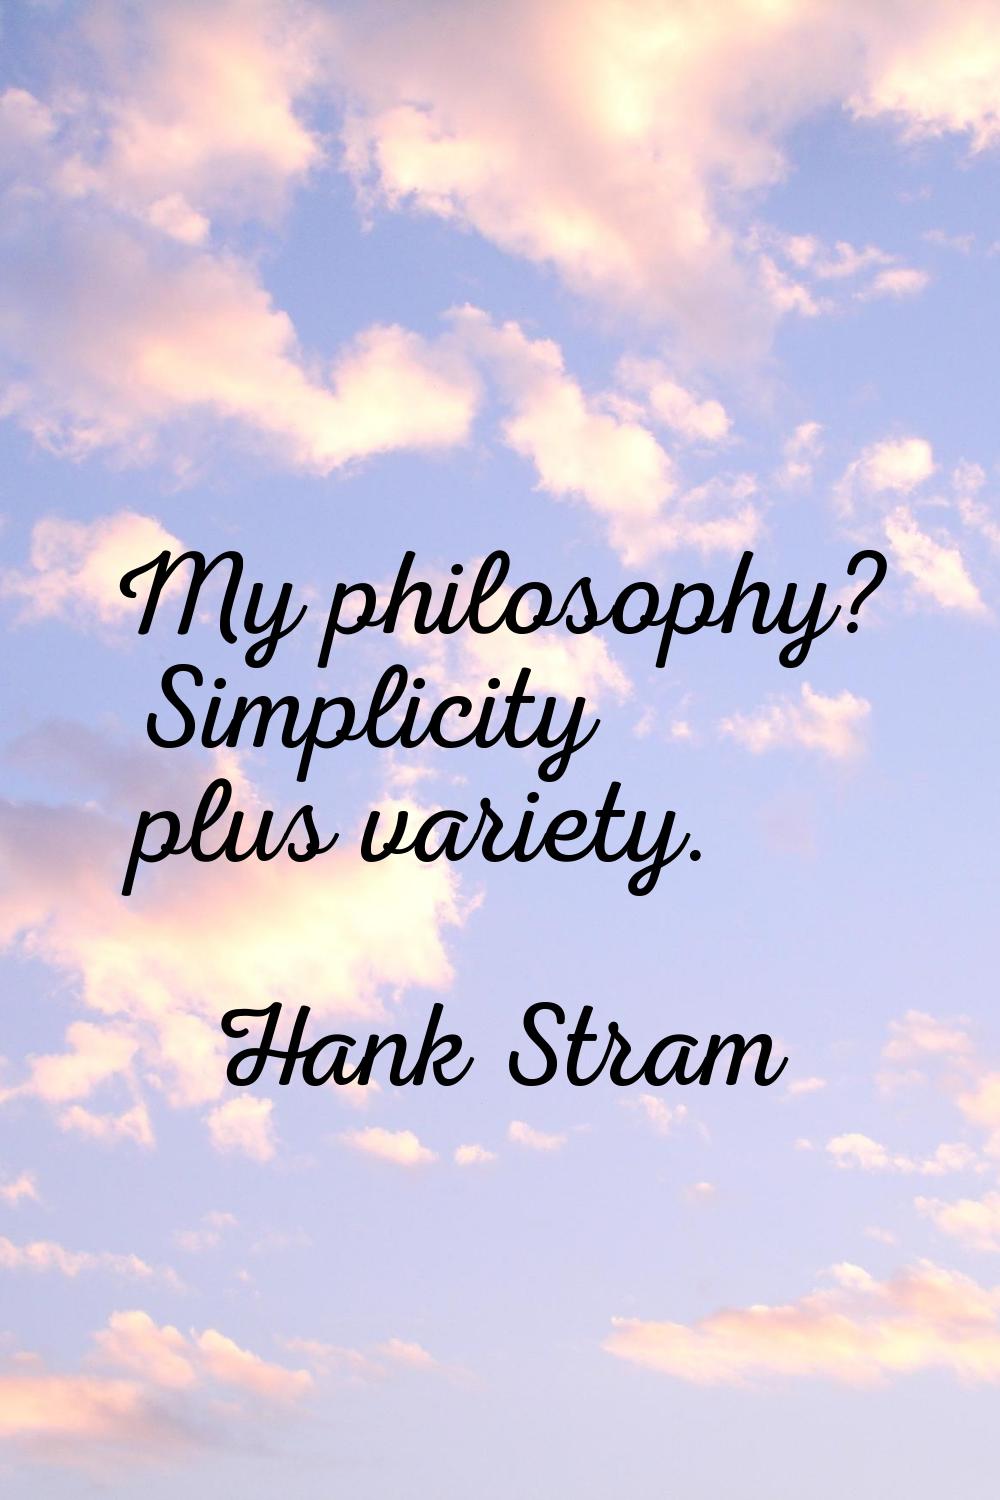 My philosophy? Simplicity plus variety.